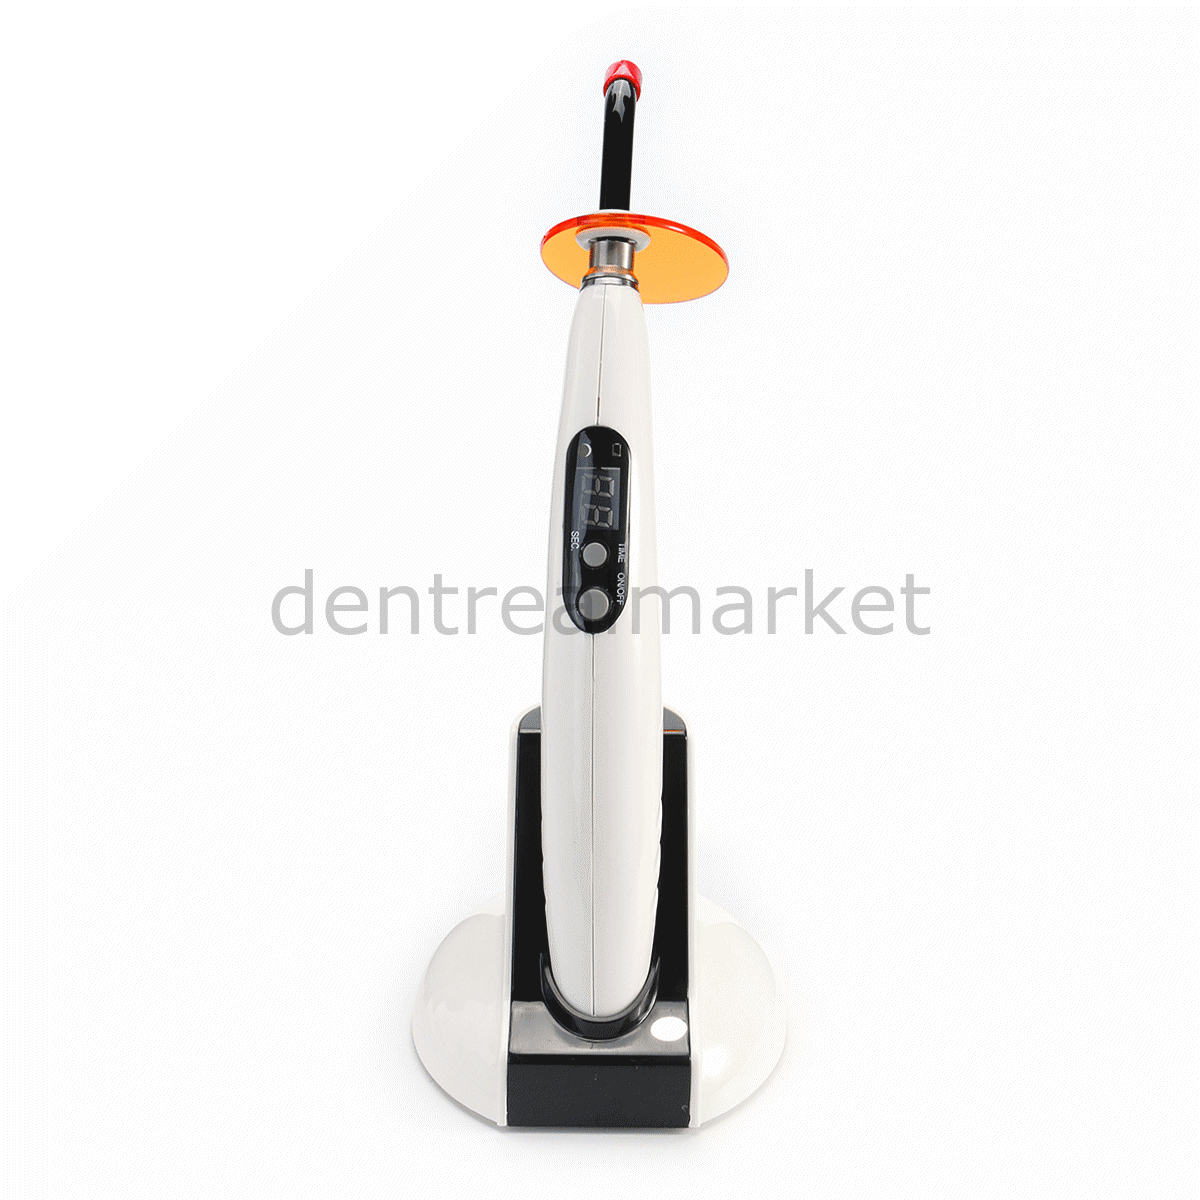 DentrealStore - Woodpecker LED-B Plus Led Curing Light - Resin Polimerization Light